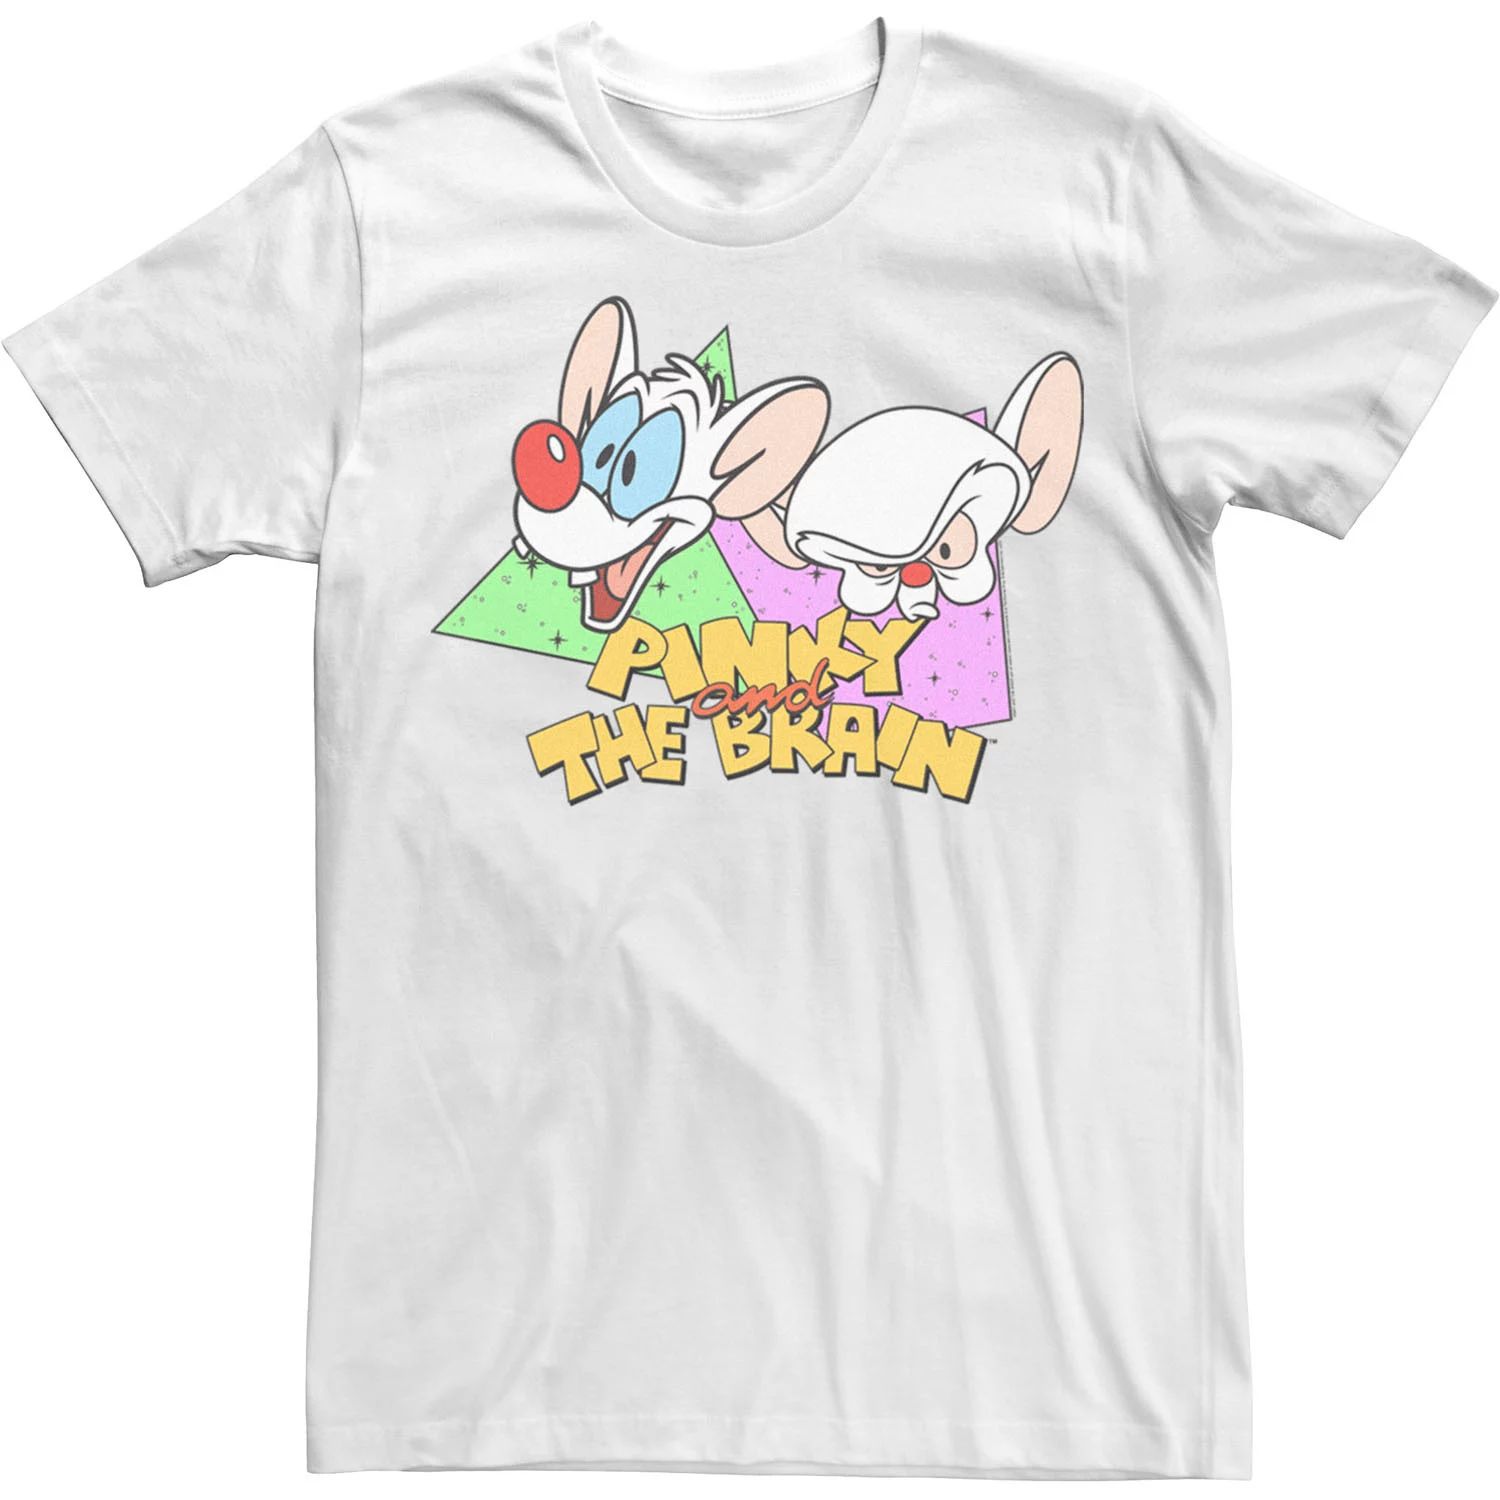 Мужская футболка с логотипом Pinky And The Brain в стиле ретро Licensed Character